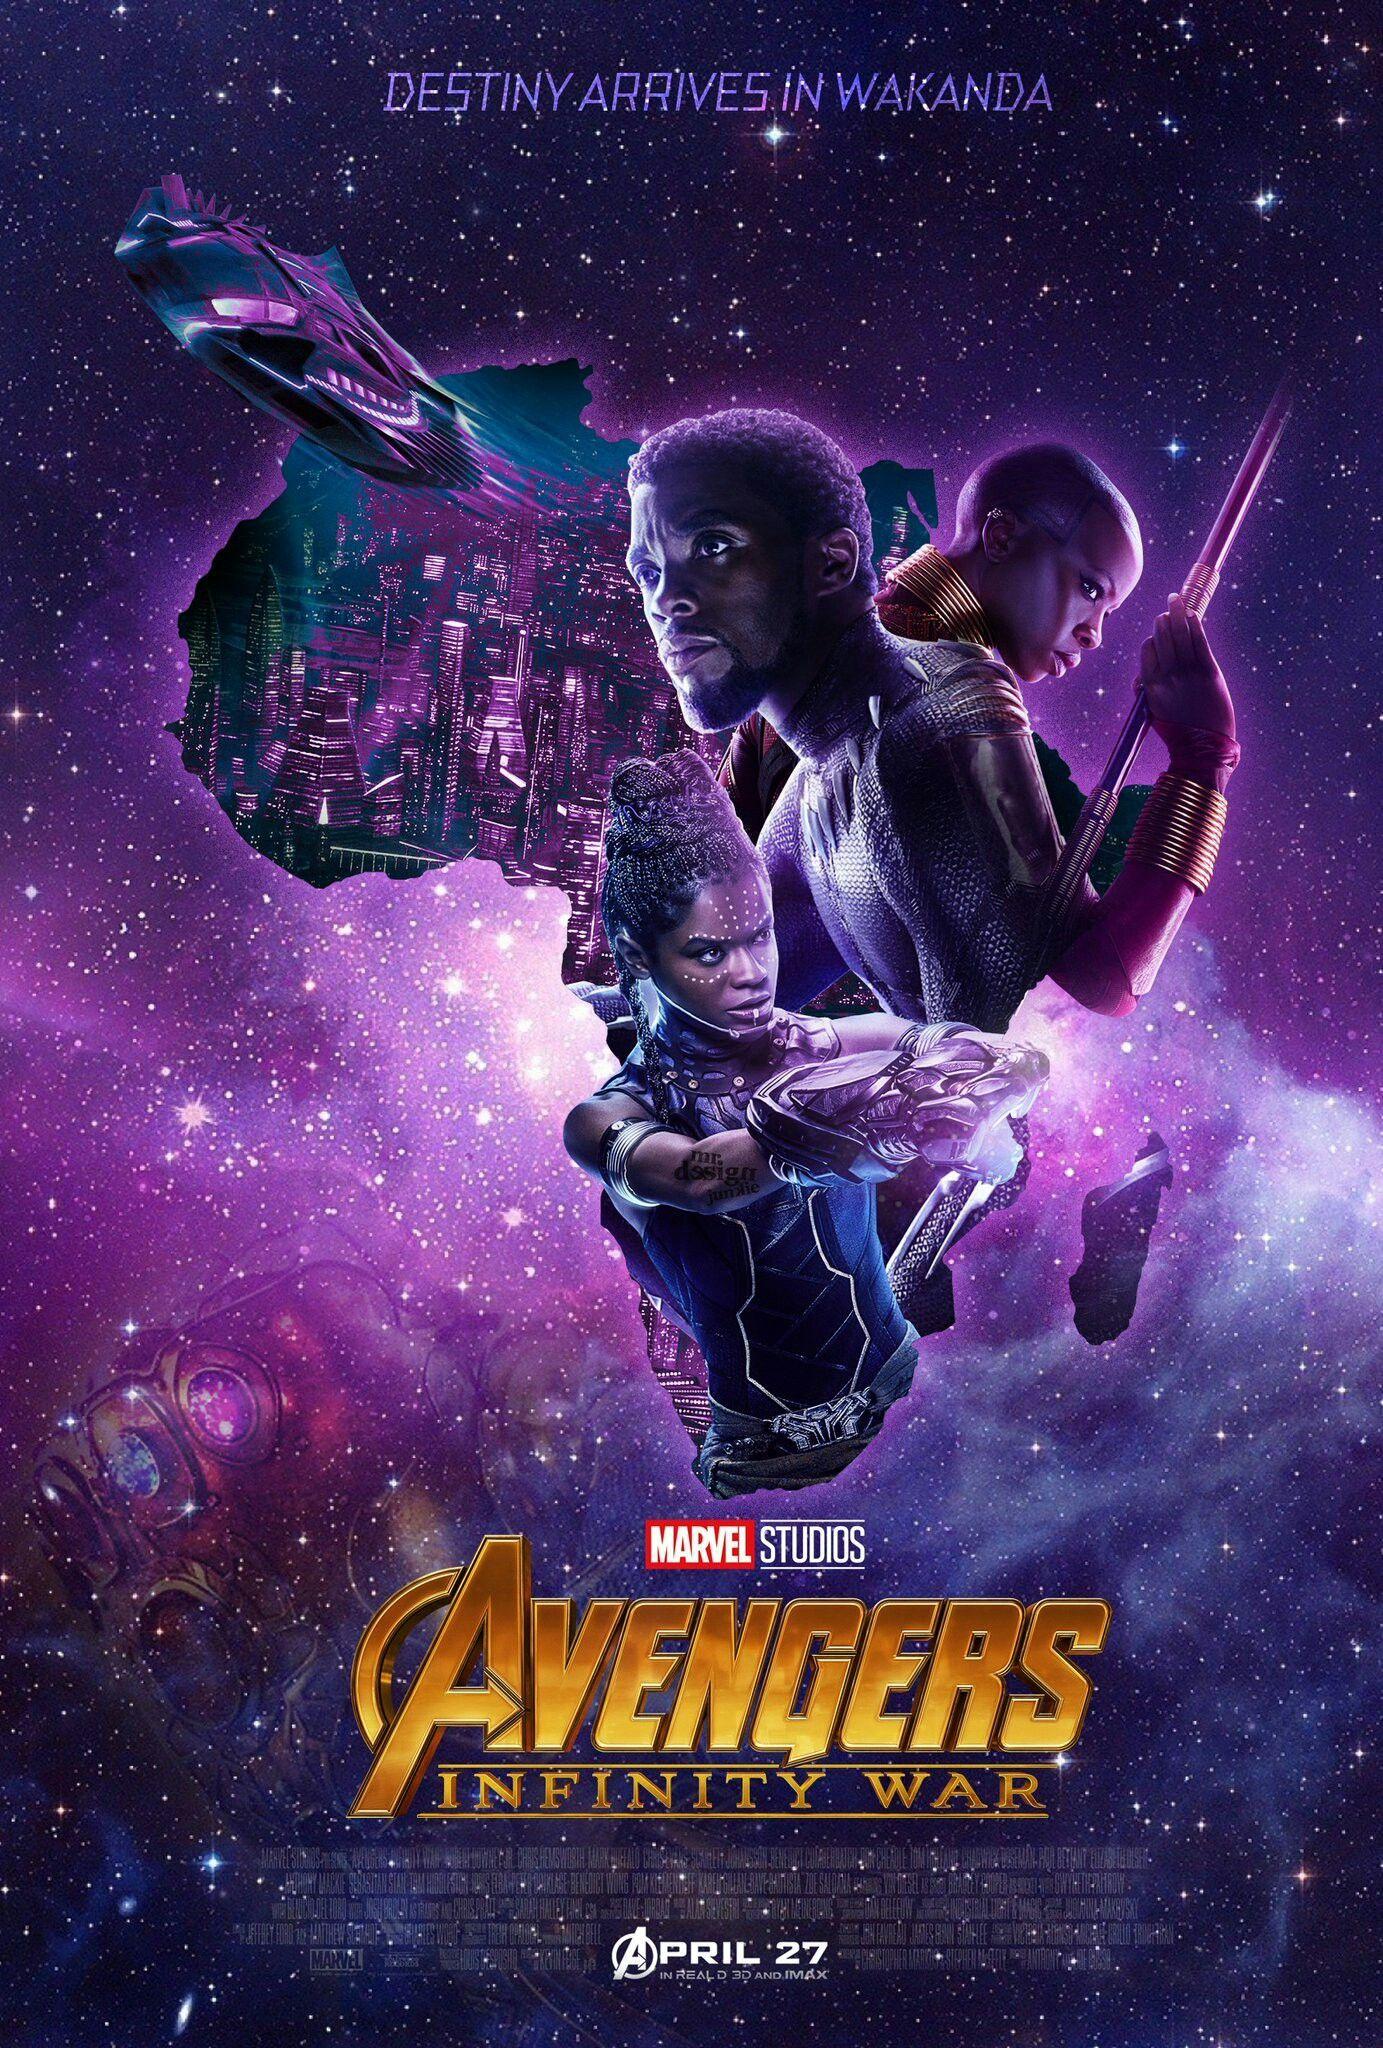 Black Panther, Okoye and Shuri Wakanda Avengers: Infinity War